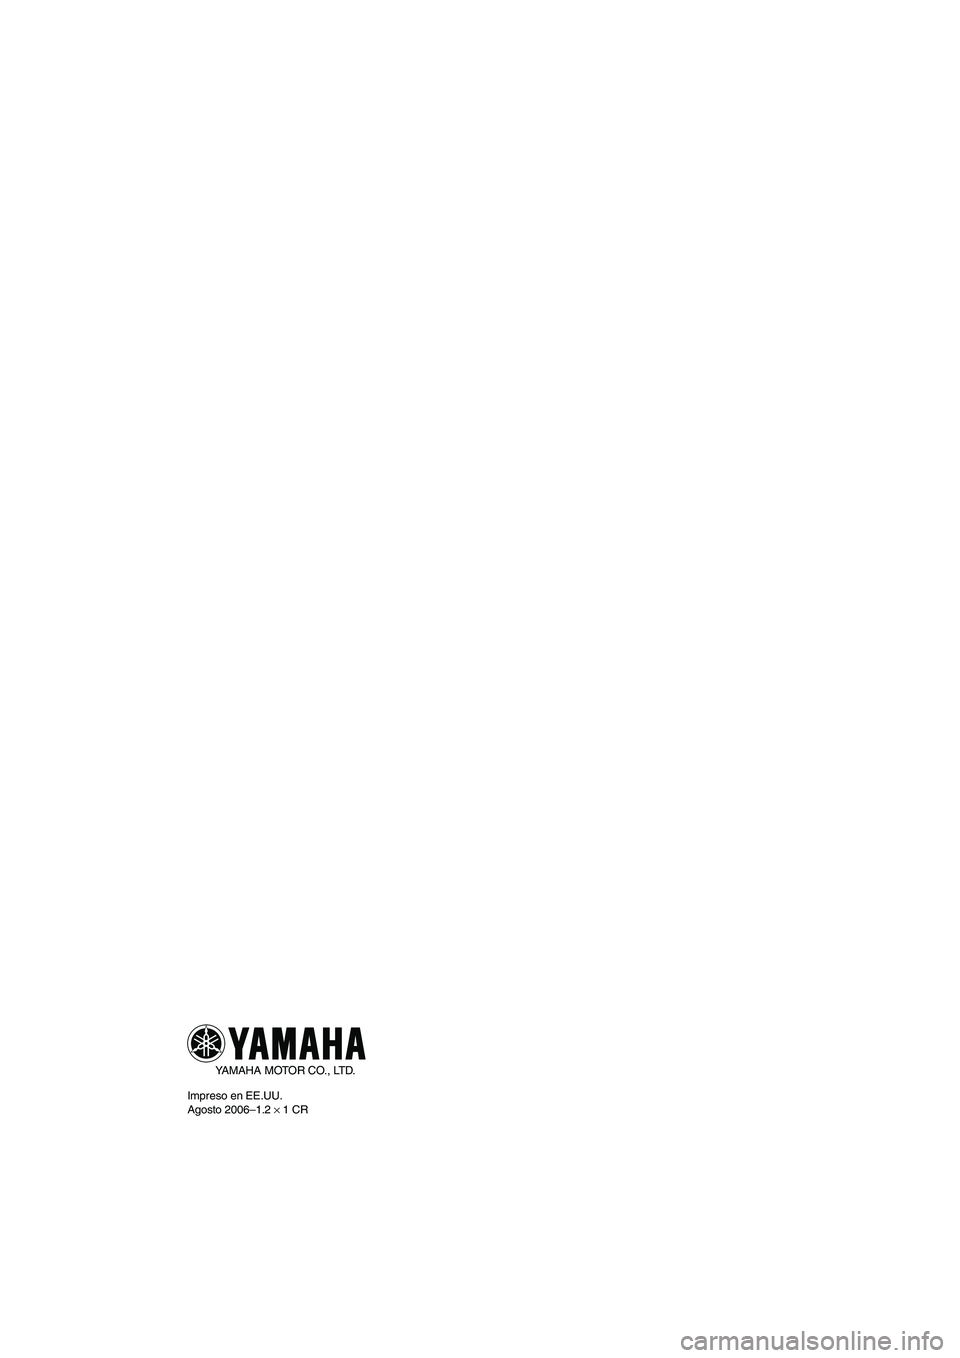 YAMAHA VX SPORT 2007  Manuale de Empleo (in Spanish) YAMAHA MOTOR CO., LTD.
Impreso en EE.UU.
Agosto 2006–1.2 × 1 CR
UF1K72S0.book  Page 1  Thursday, August 3, 2006  9:58 AM 